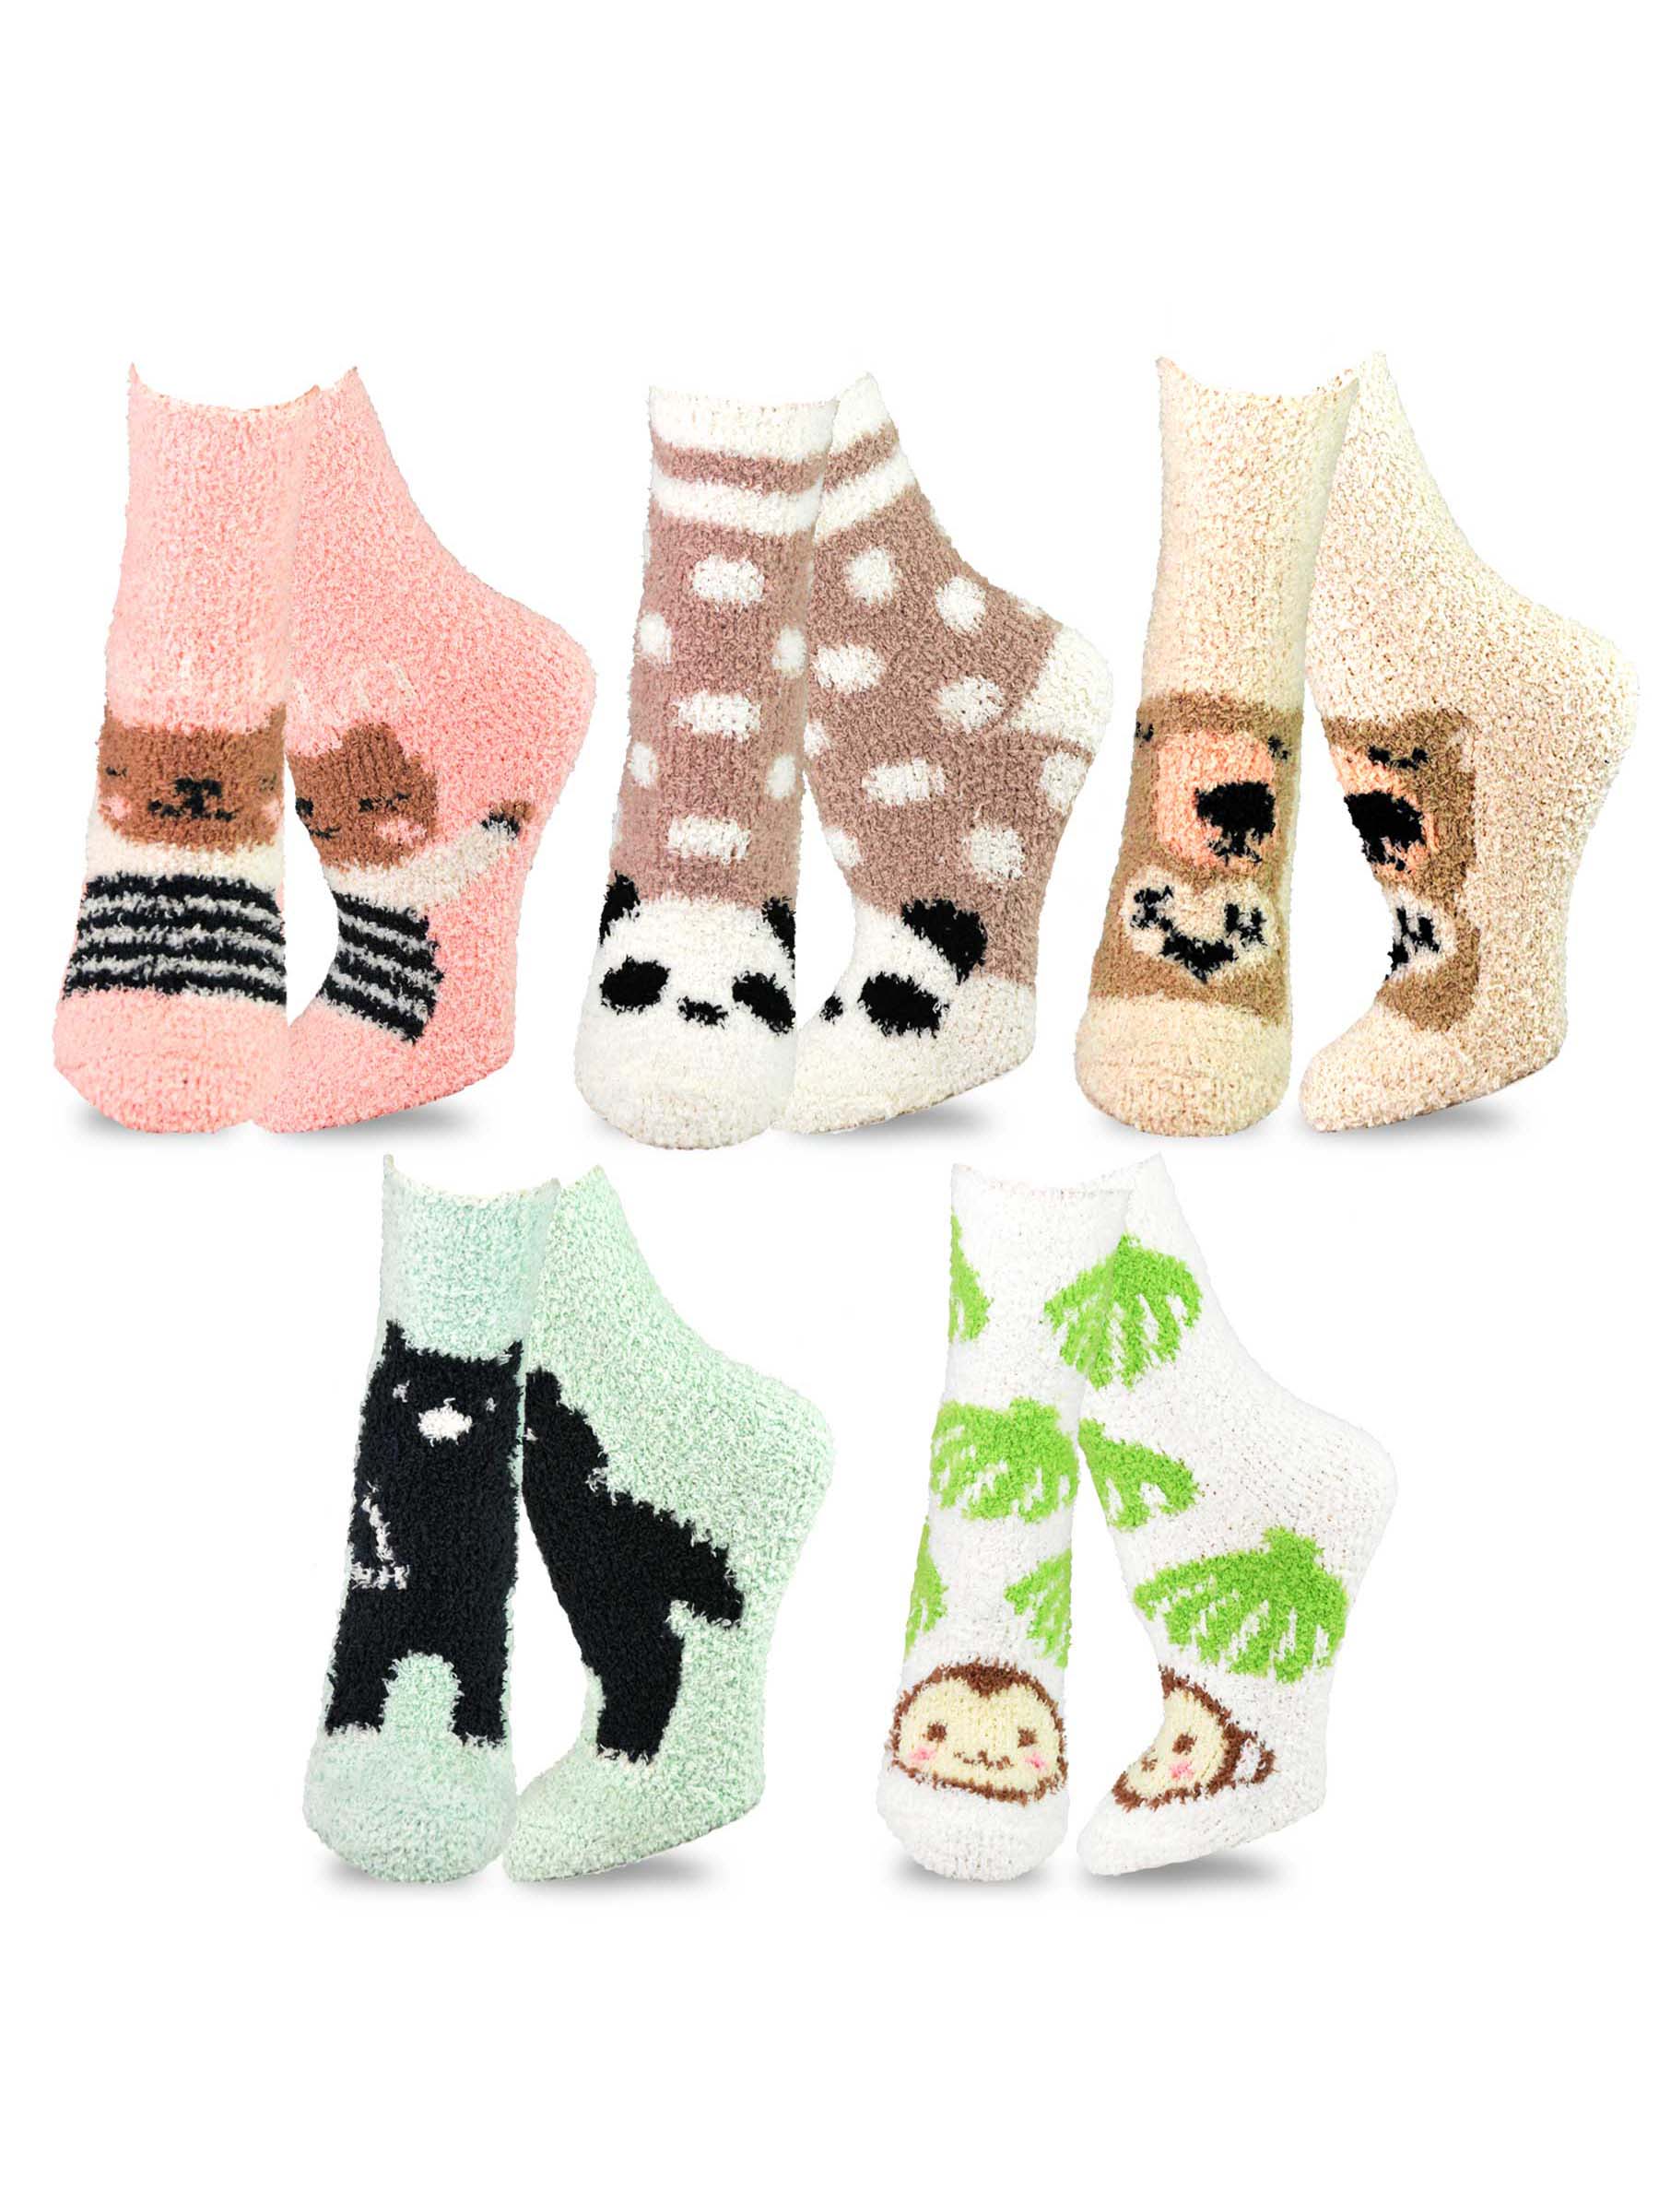 TeeHee Fashionable Cozy Fuzzy Slipper Crew Socks for Women 5-Pack - image 1 of 8